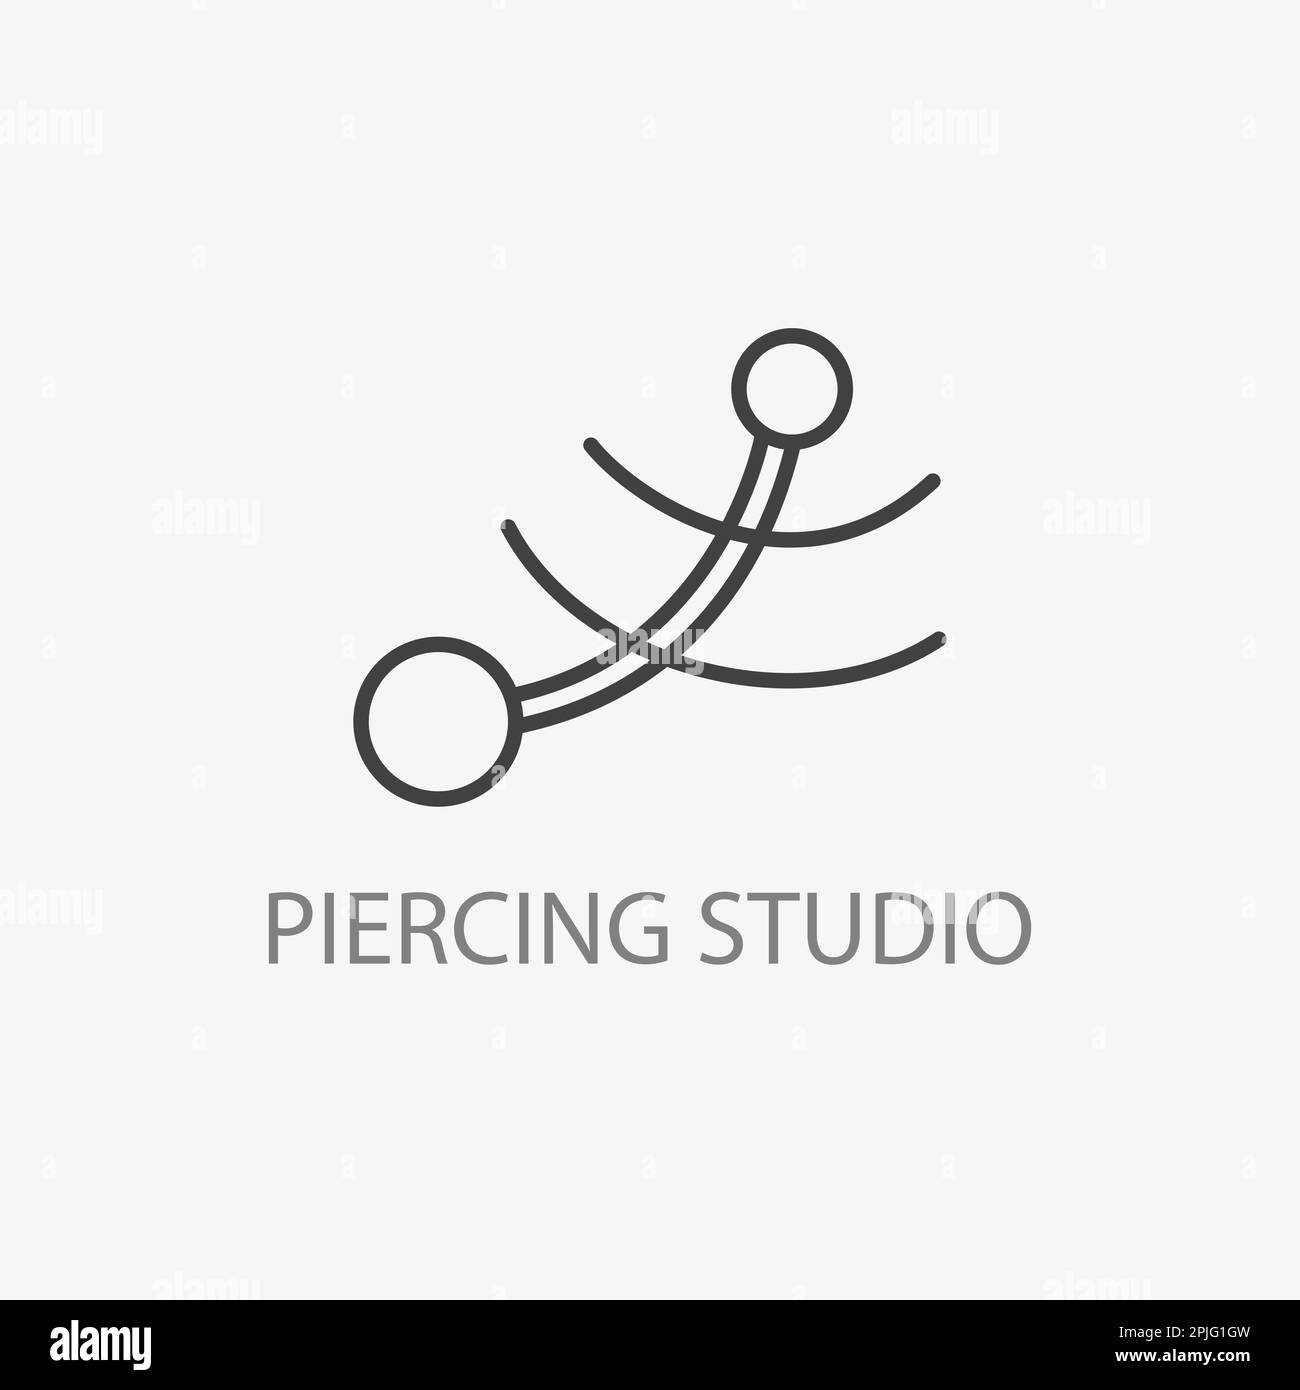 Piercing studio logo. Minimal jewelry pierce icon Stock Vector